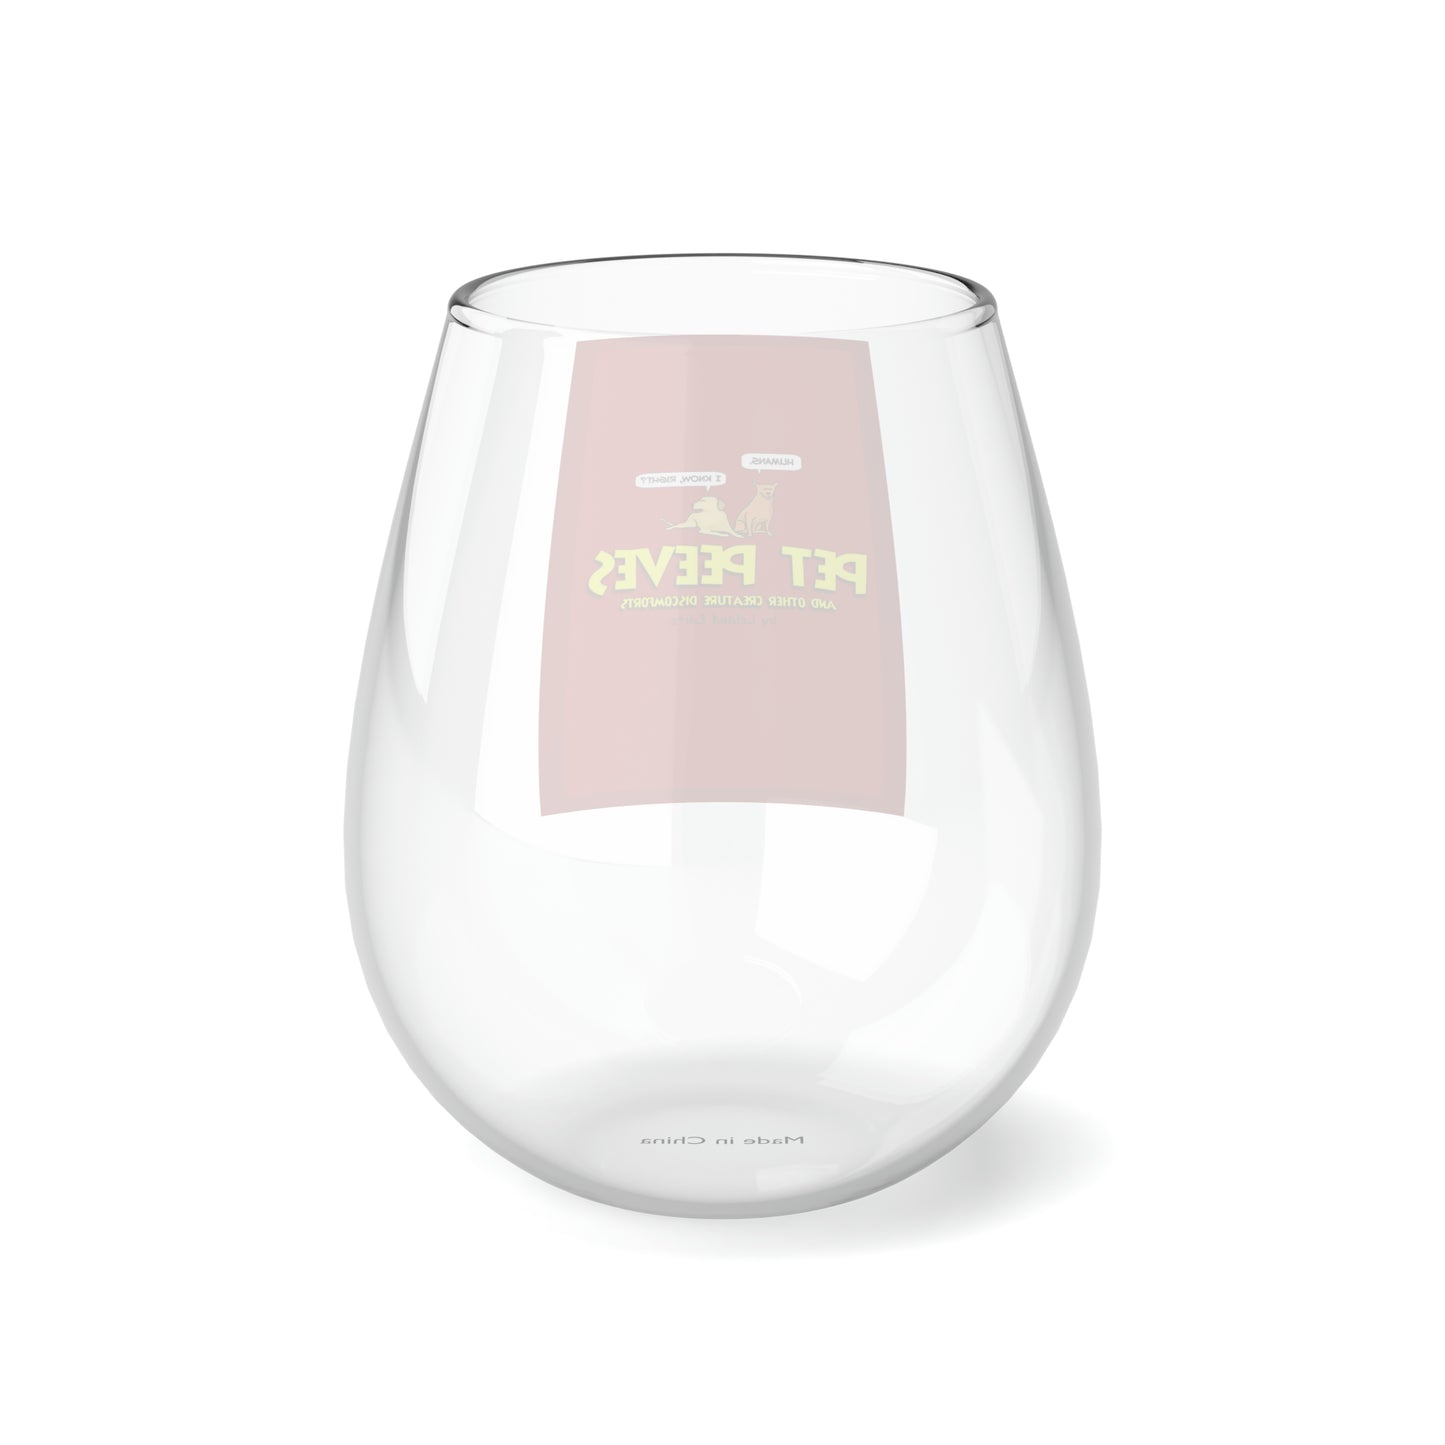 Pet Peeves - Stemless Wine Glass, 11.75oz